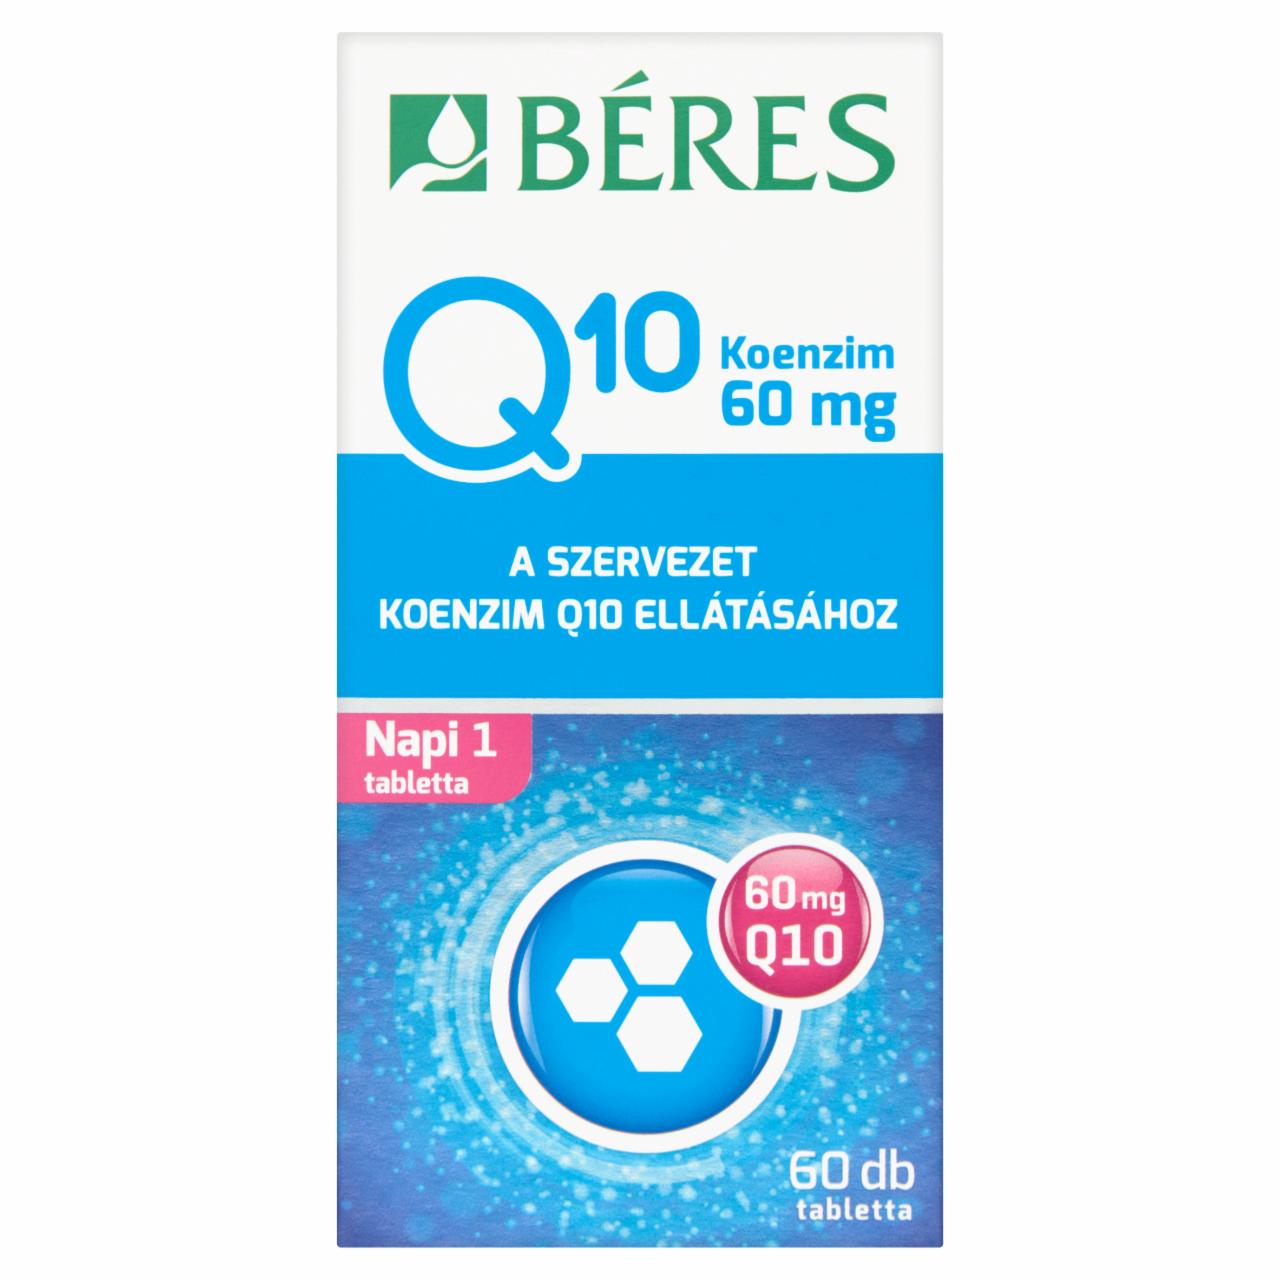 Képek - Béres Koenzim Q10 60 mg tabletta 60 db 33 g